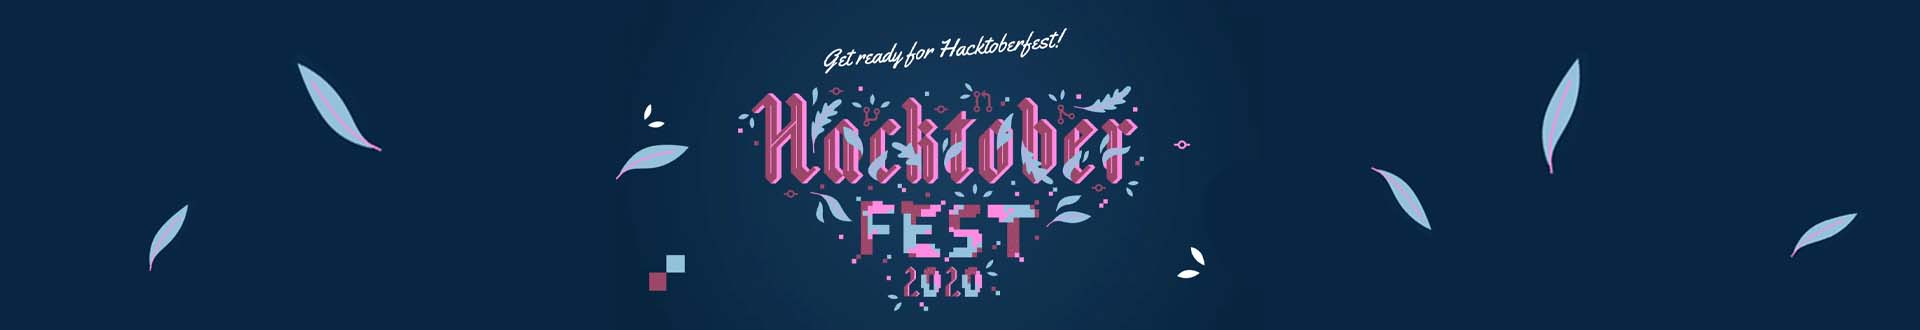 hacktoberfest2020-banner